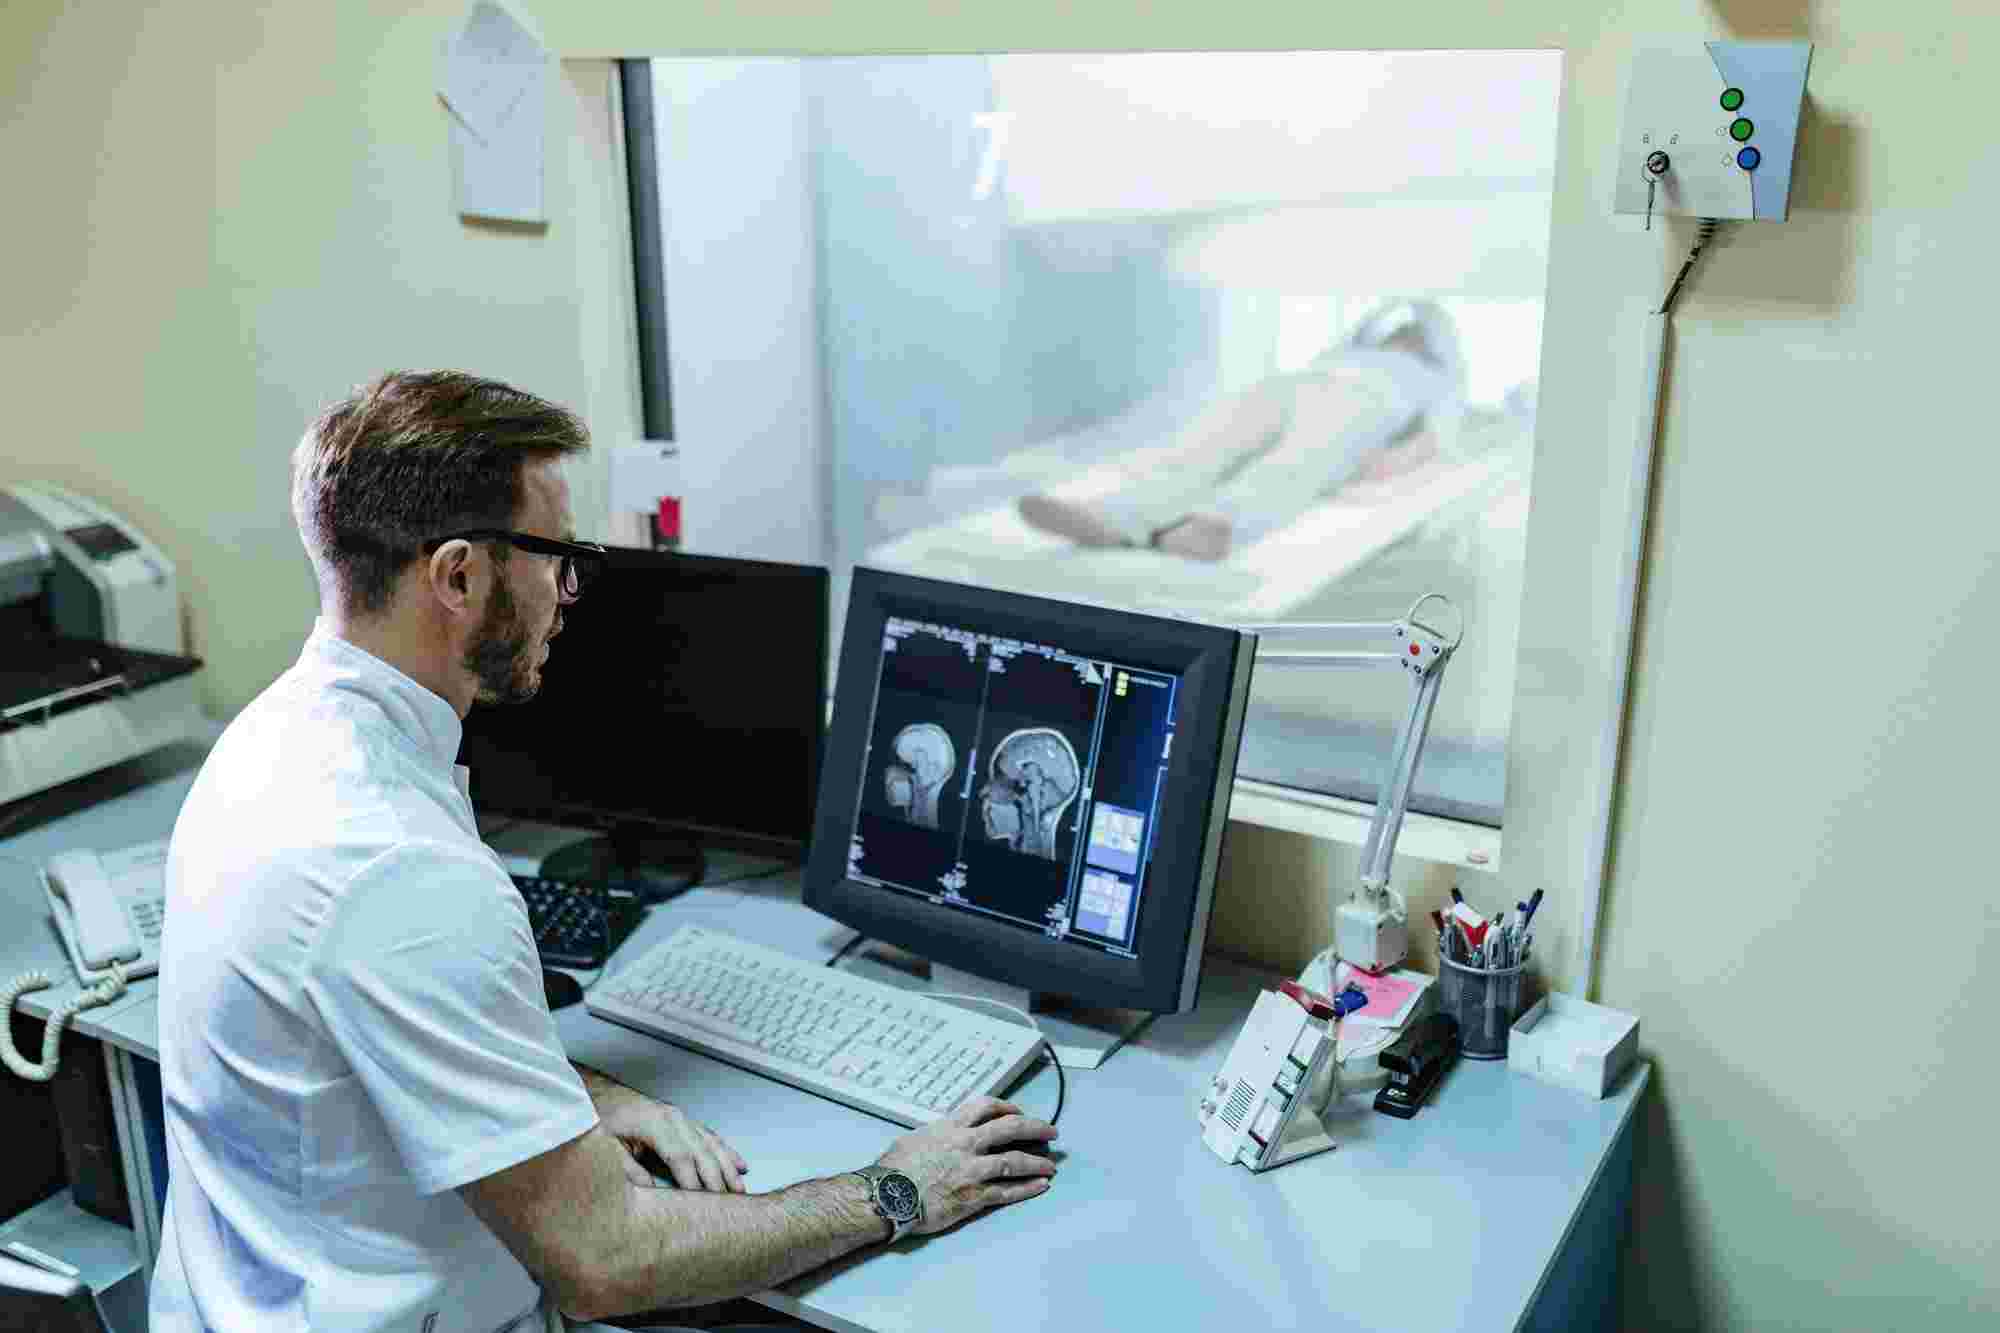 Radiology Management